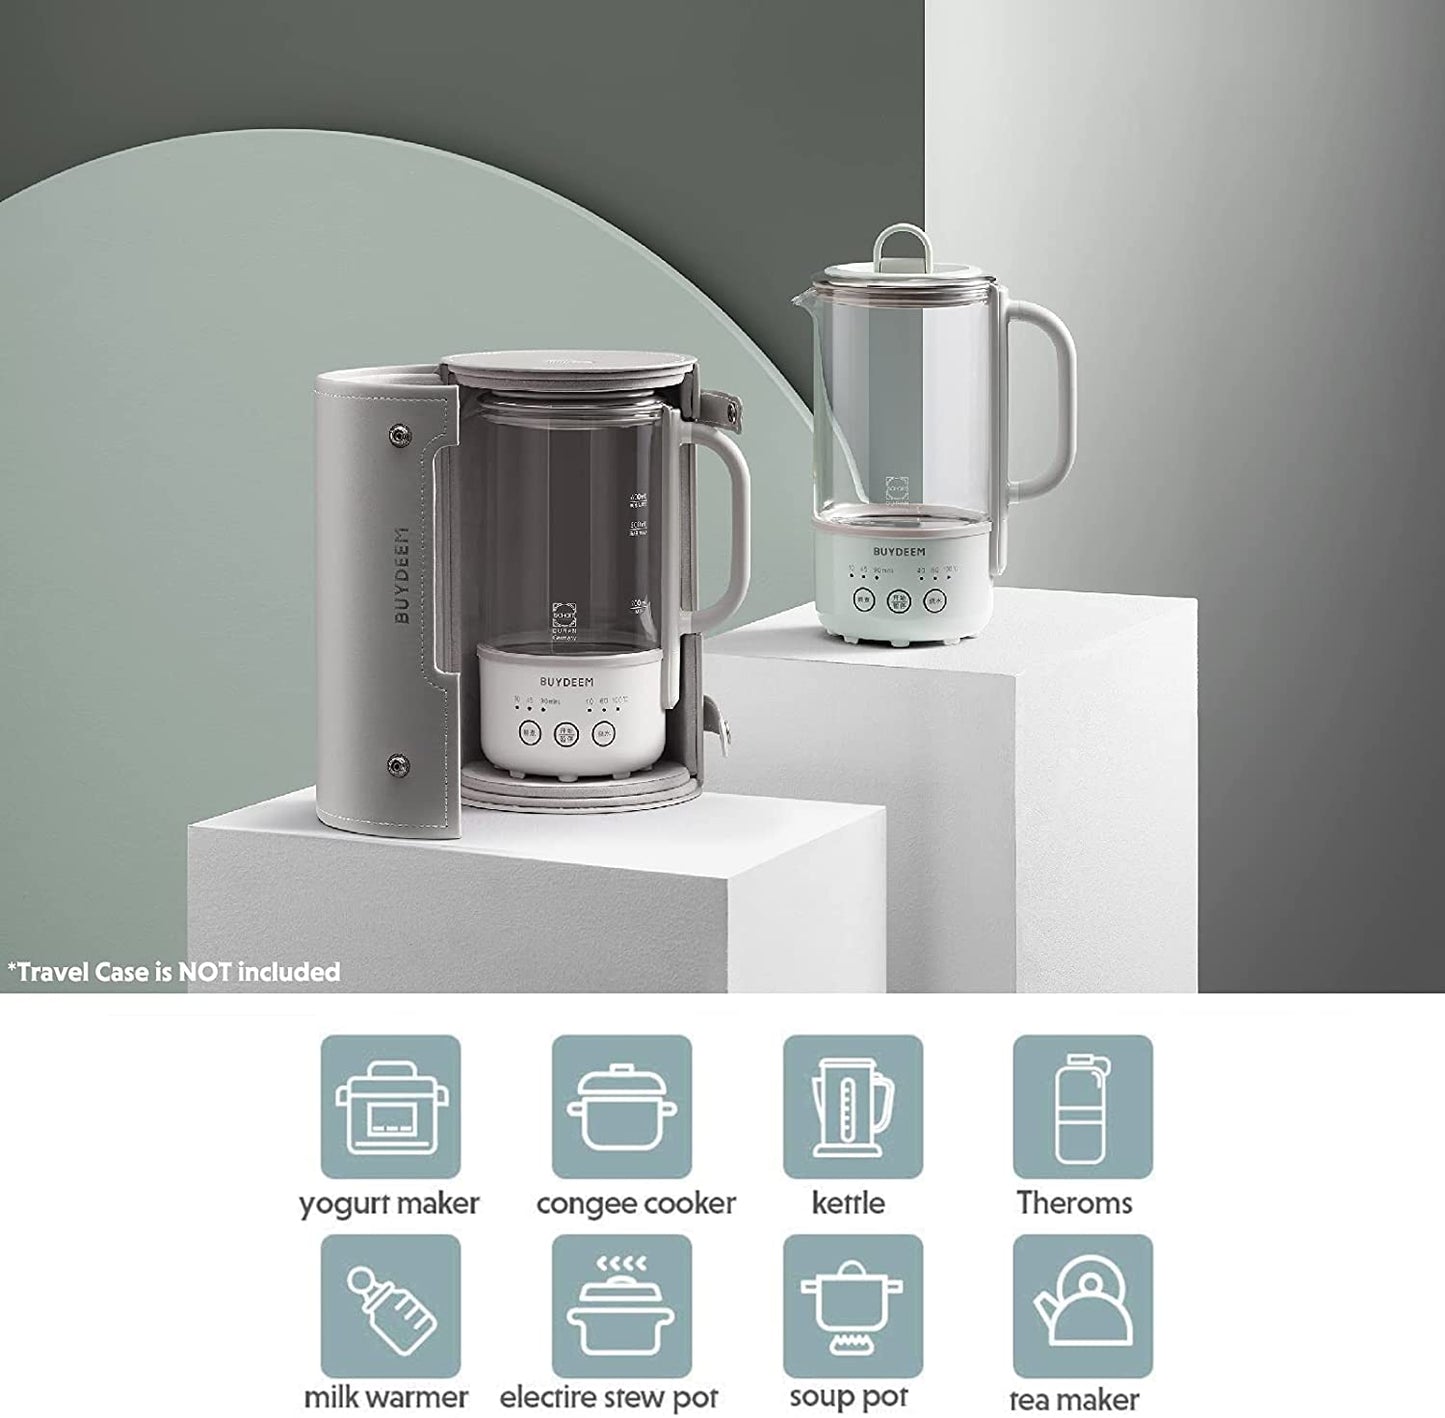 [BUYDEEM K313] Mini Kettle Cooker| Mini Health Pot| 0.6 Liter| Green| Light And Small